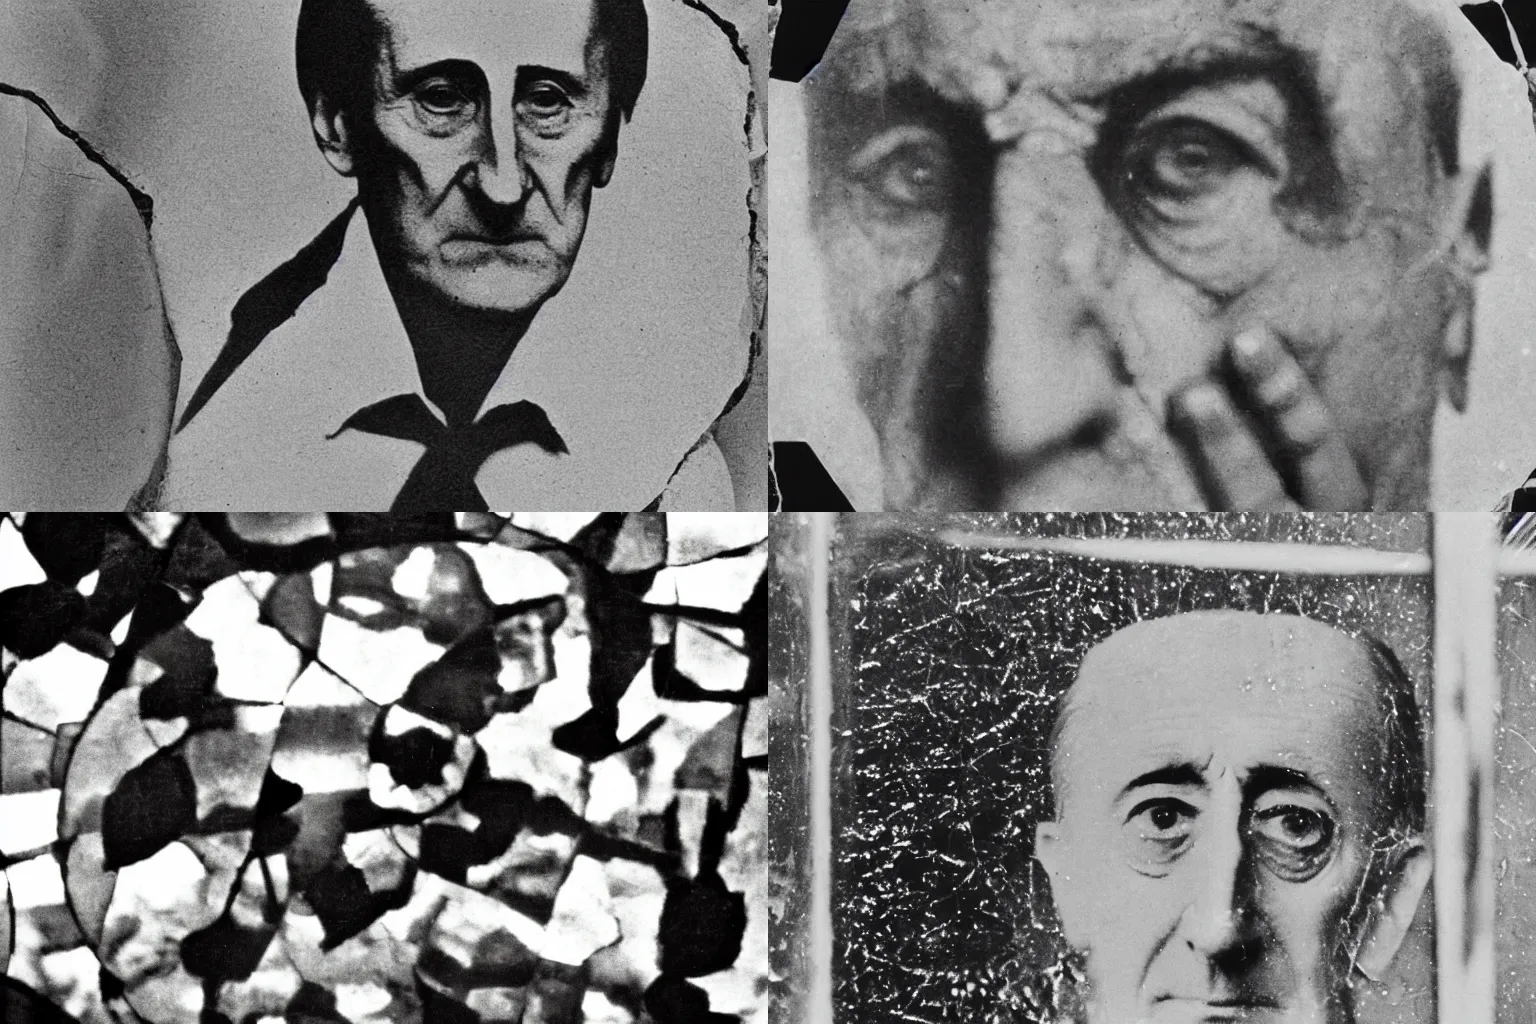 Prompt: a close-up photograph of Marcel Duchamp seen through broken prismatic glass aberrations